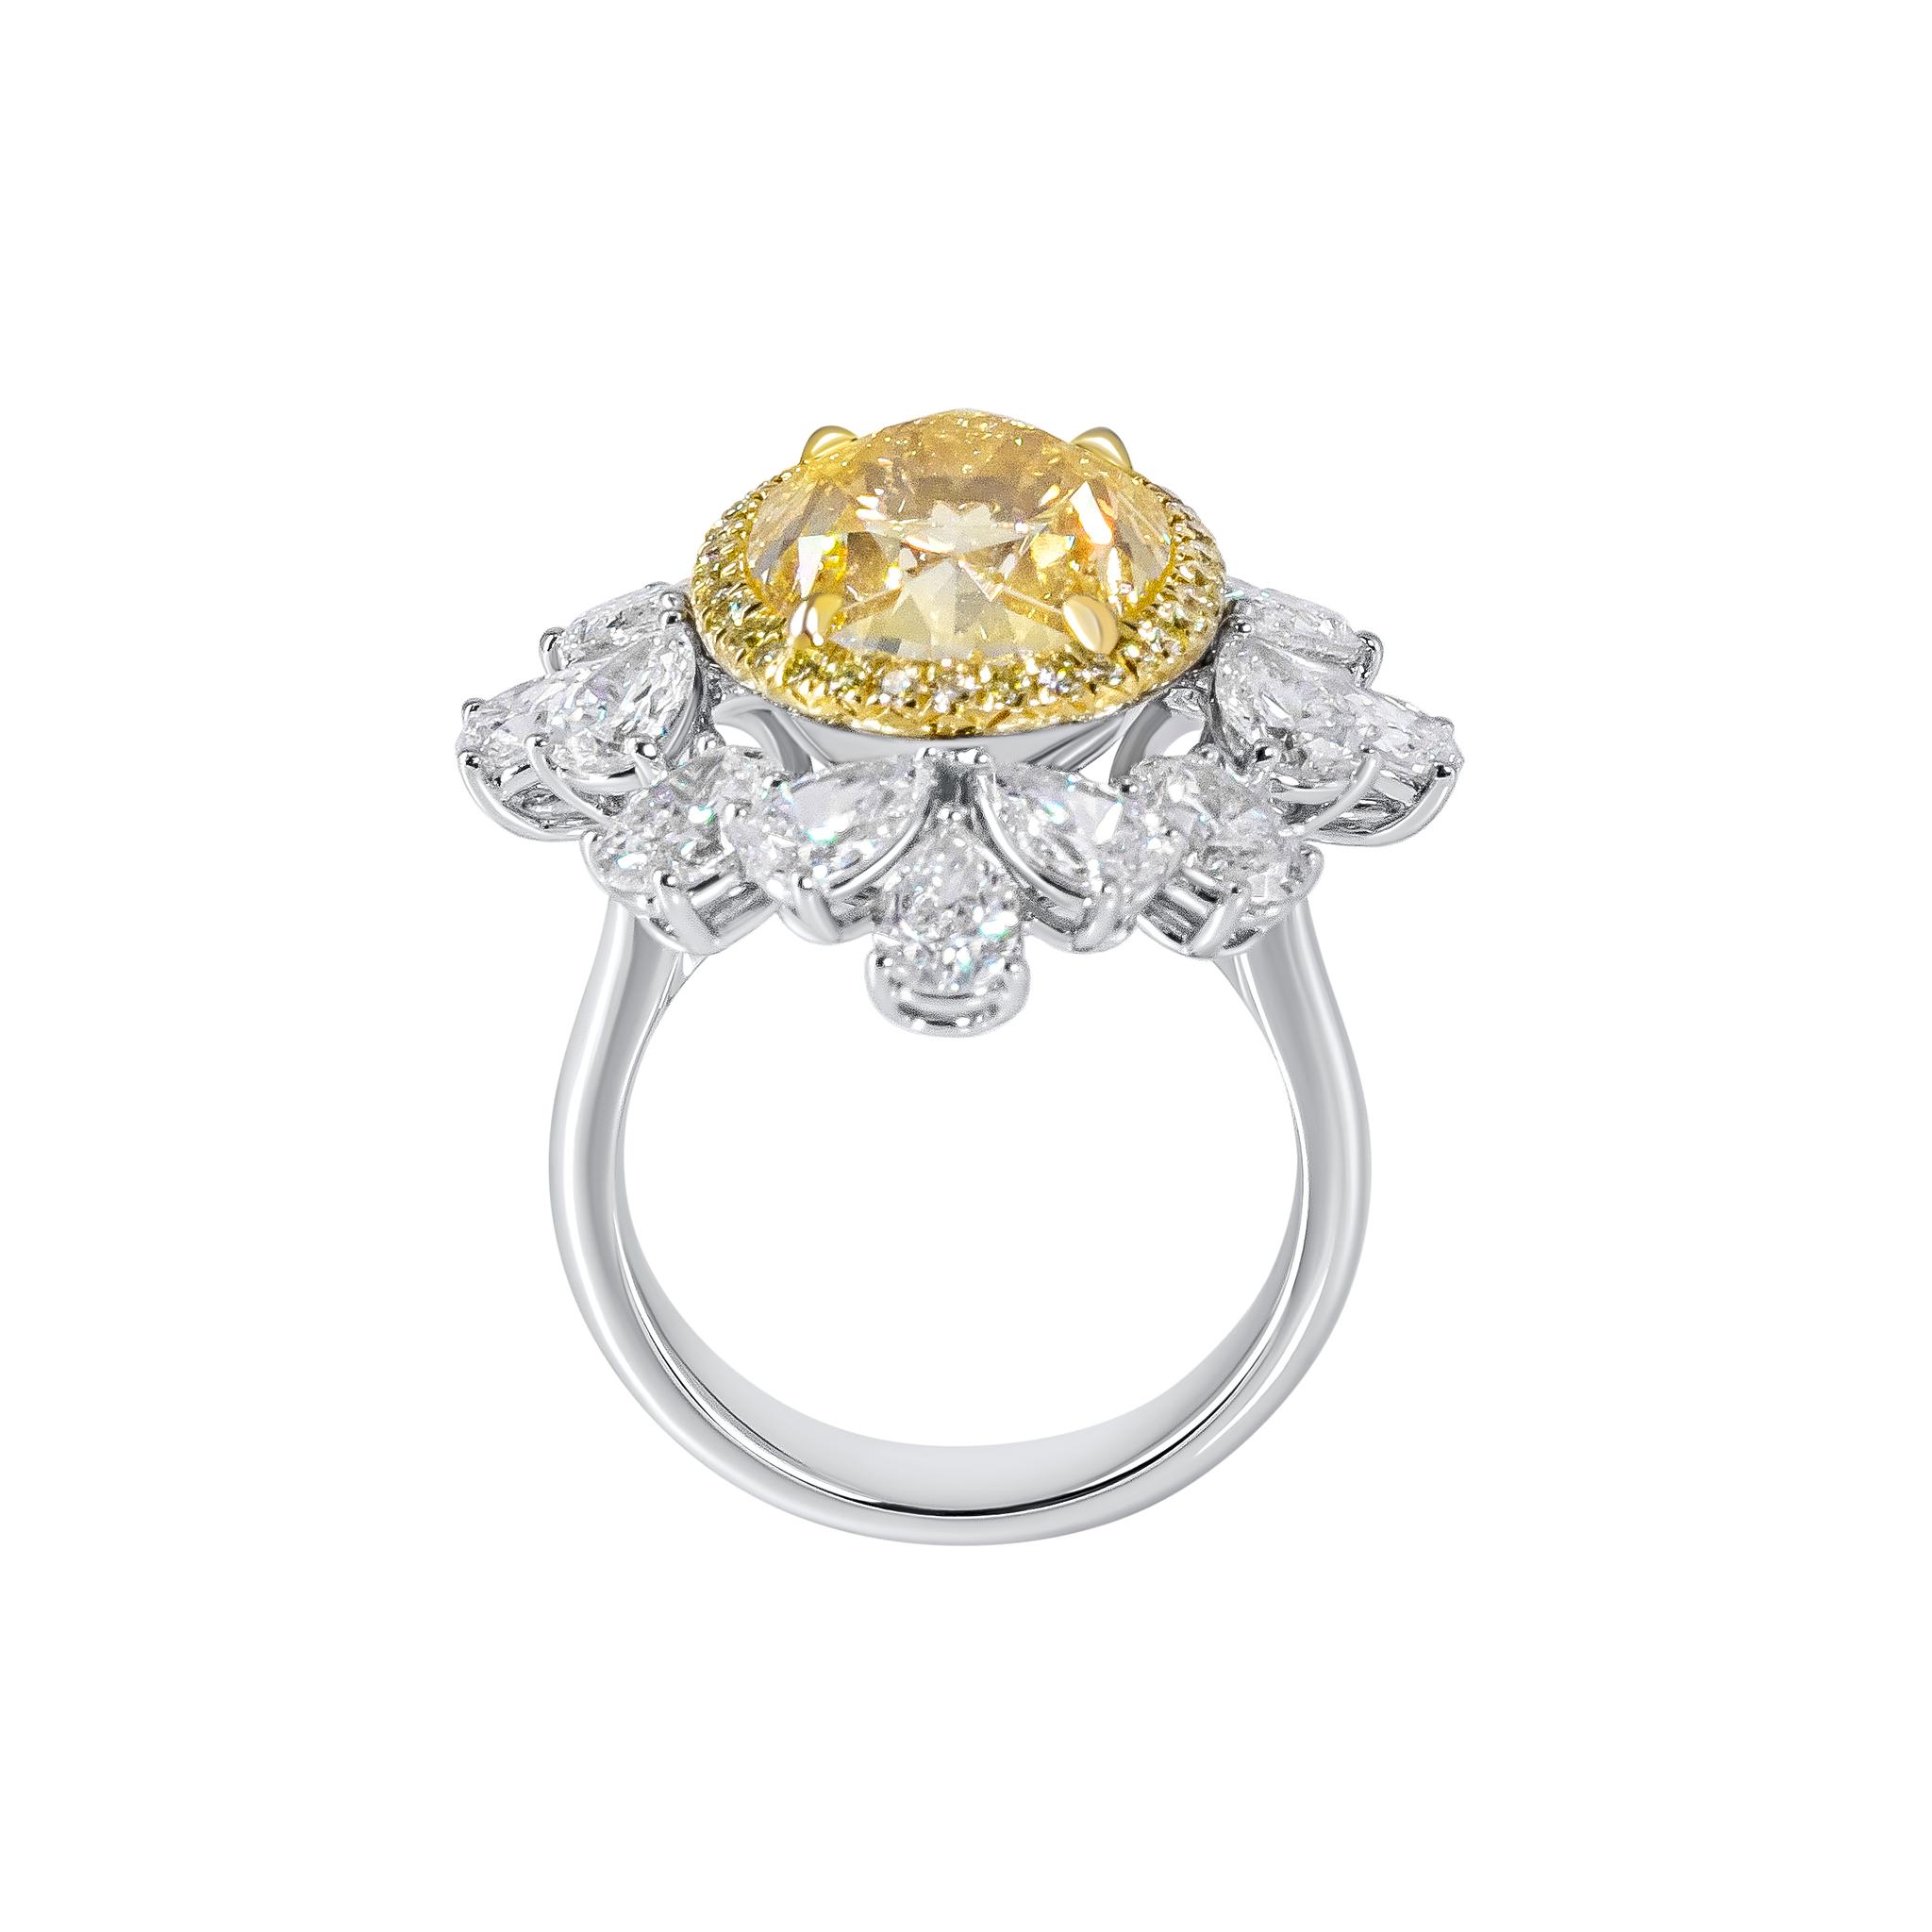 Fancy_yellow_diamond_ring_1.jpg